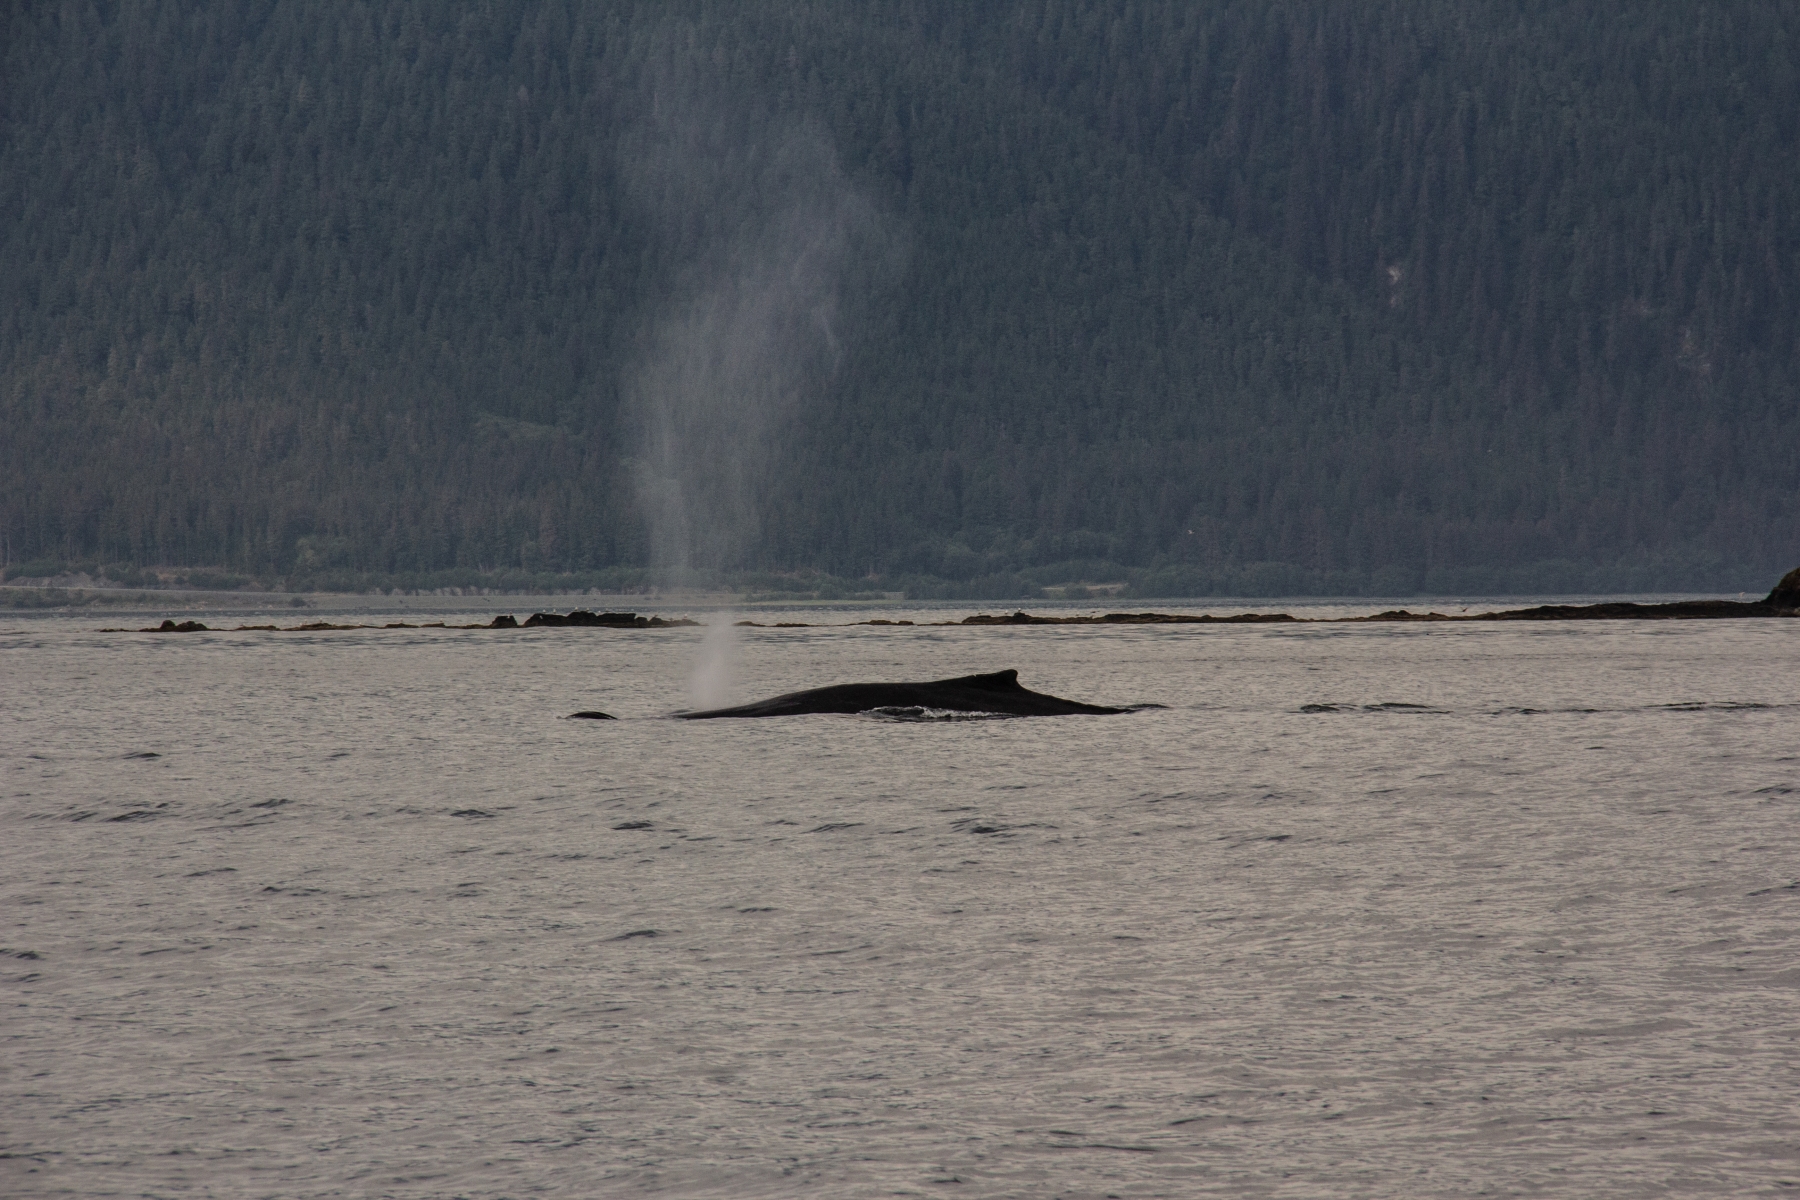 Humpback whales in Juneau, Alaska